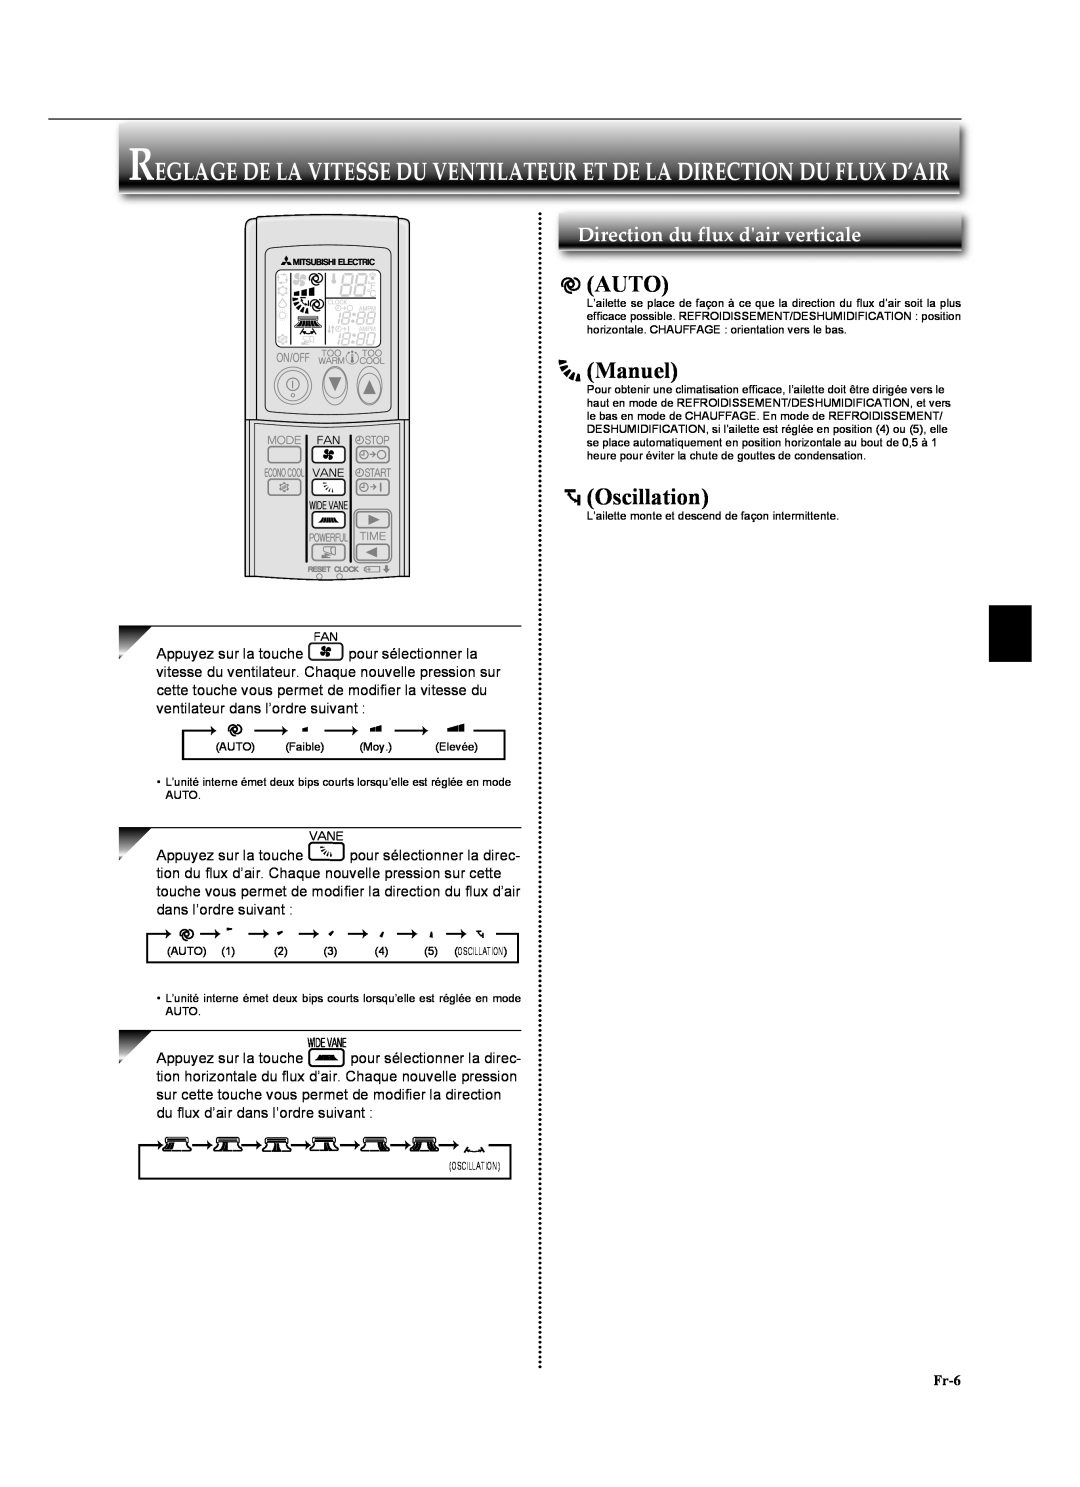 Mitsubishi Electronics MSZ-GA24NA operating instructions Manuel, Oscillation, Direction du flux dair verticale, Fr-6, Auto 